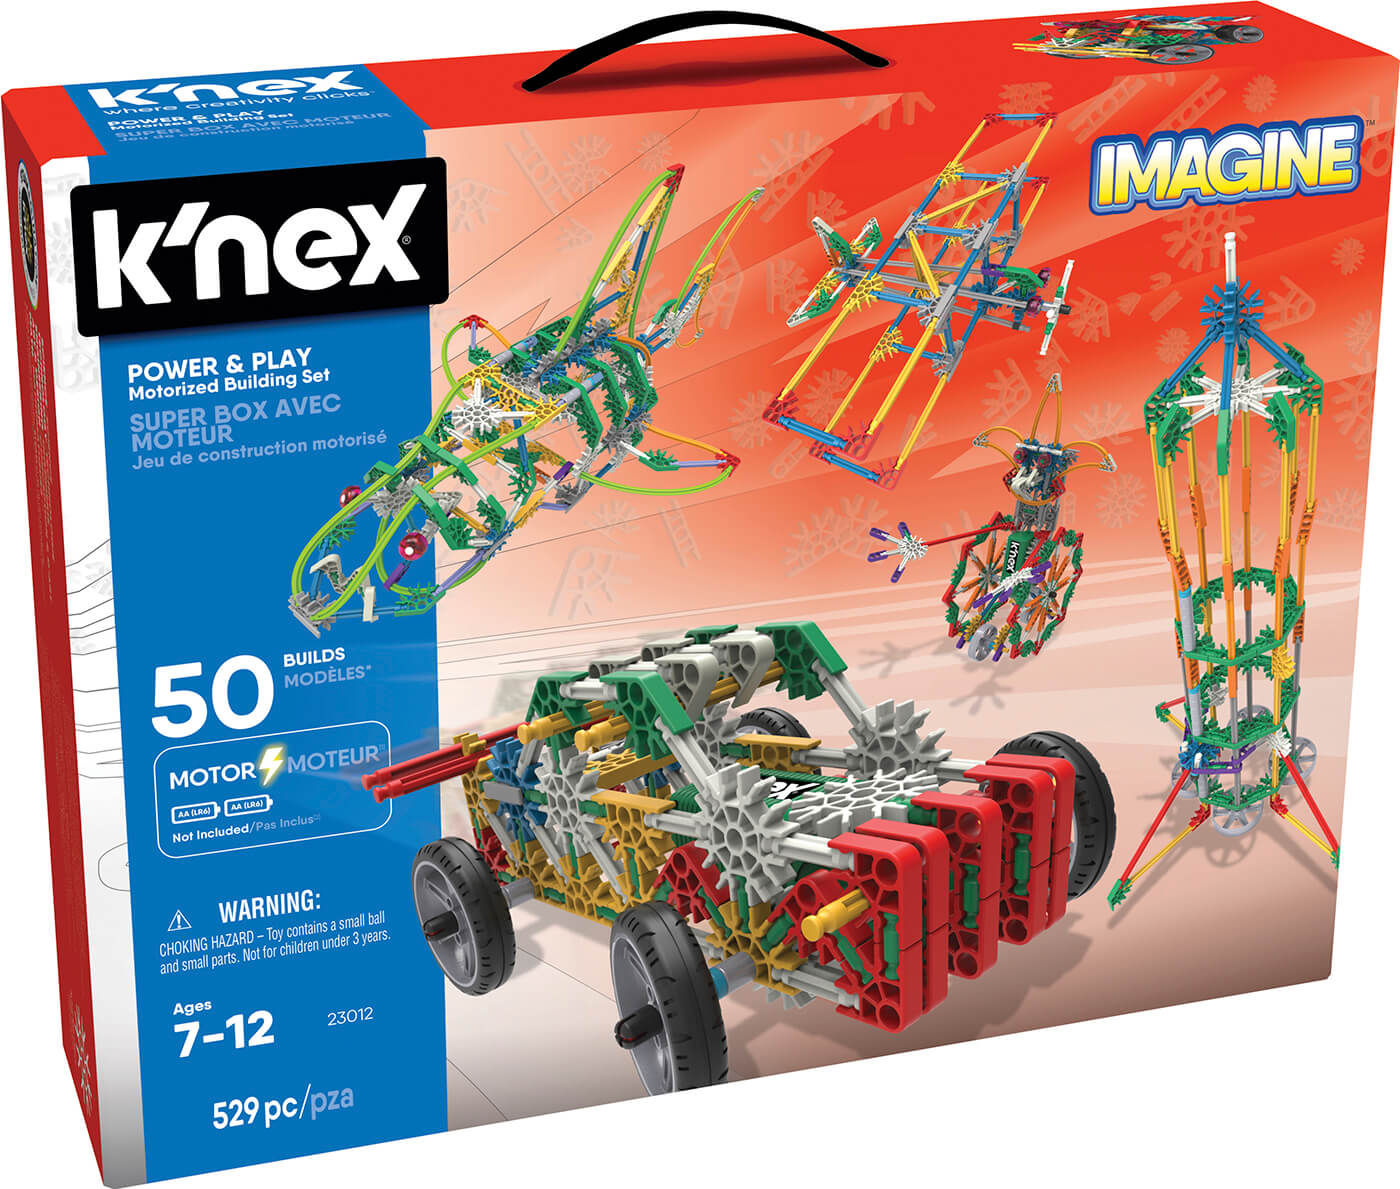 Mega Maleta Power and Play 50 Modelos ( KNEX 23012 ) imagen f